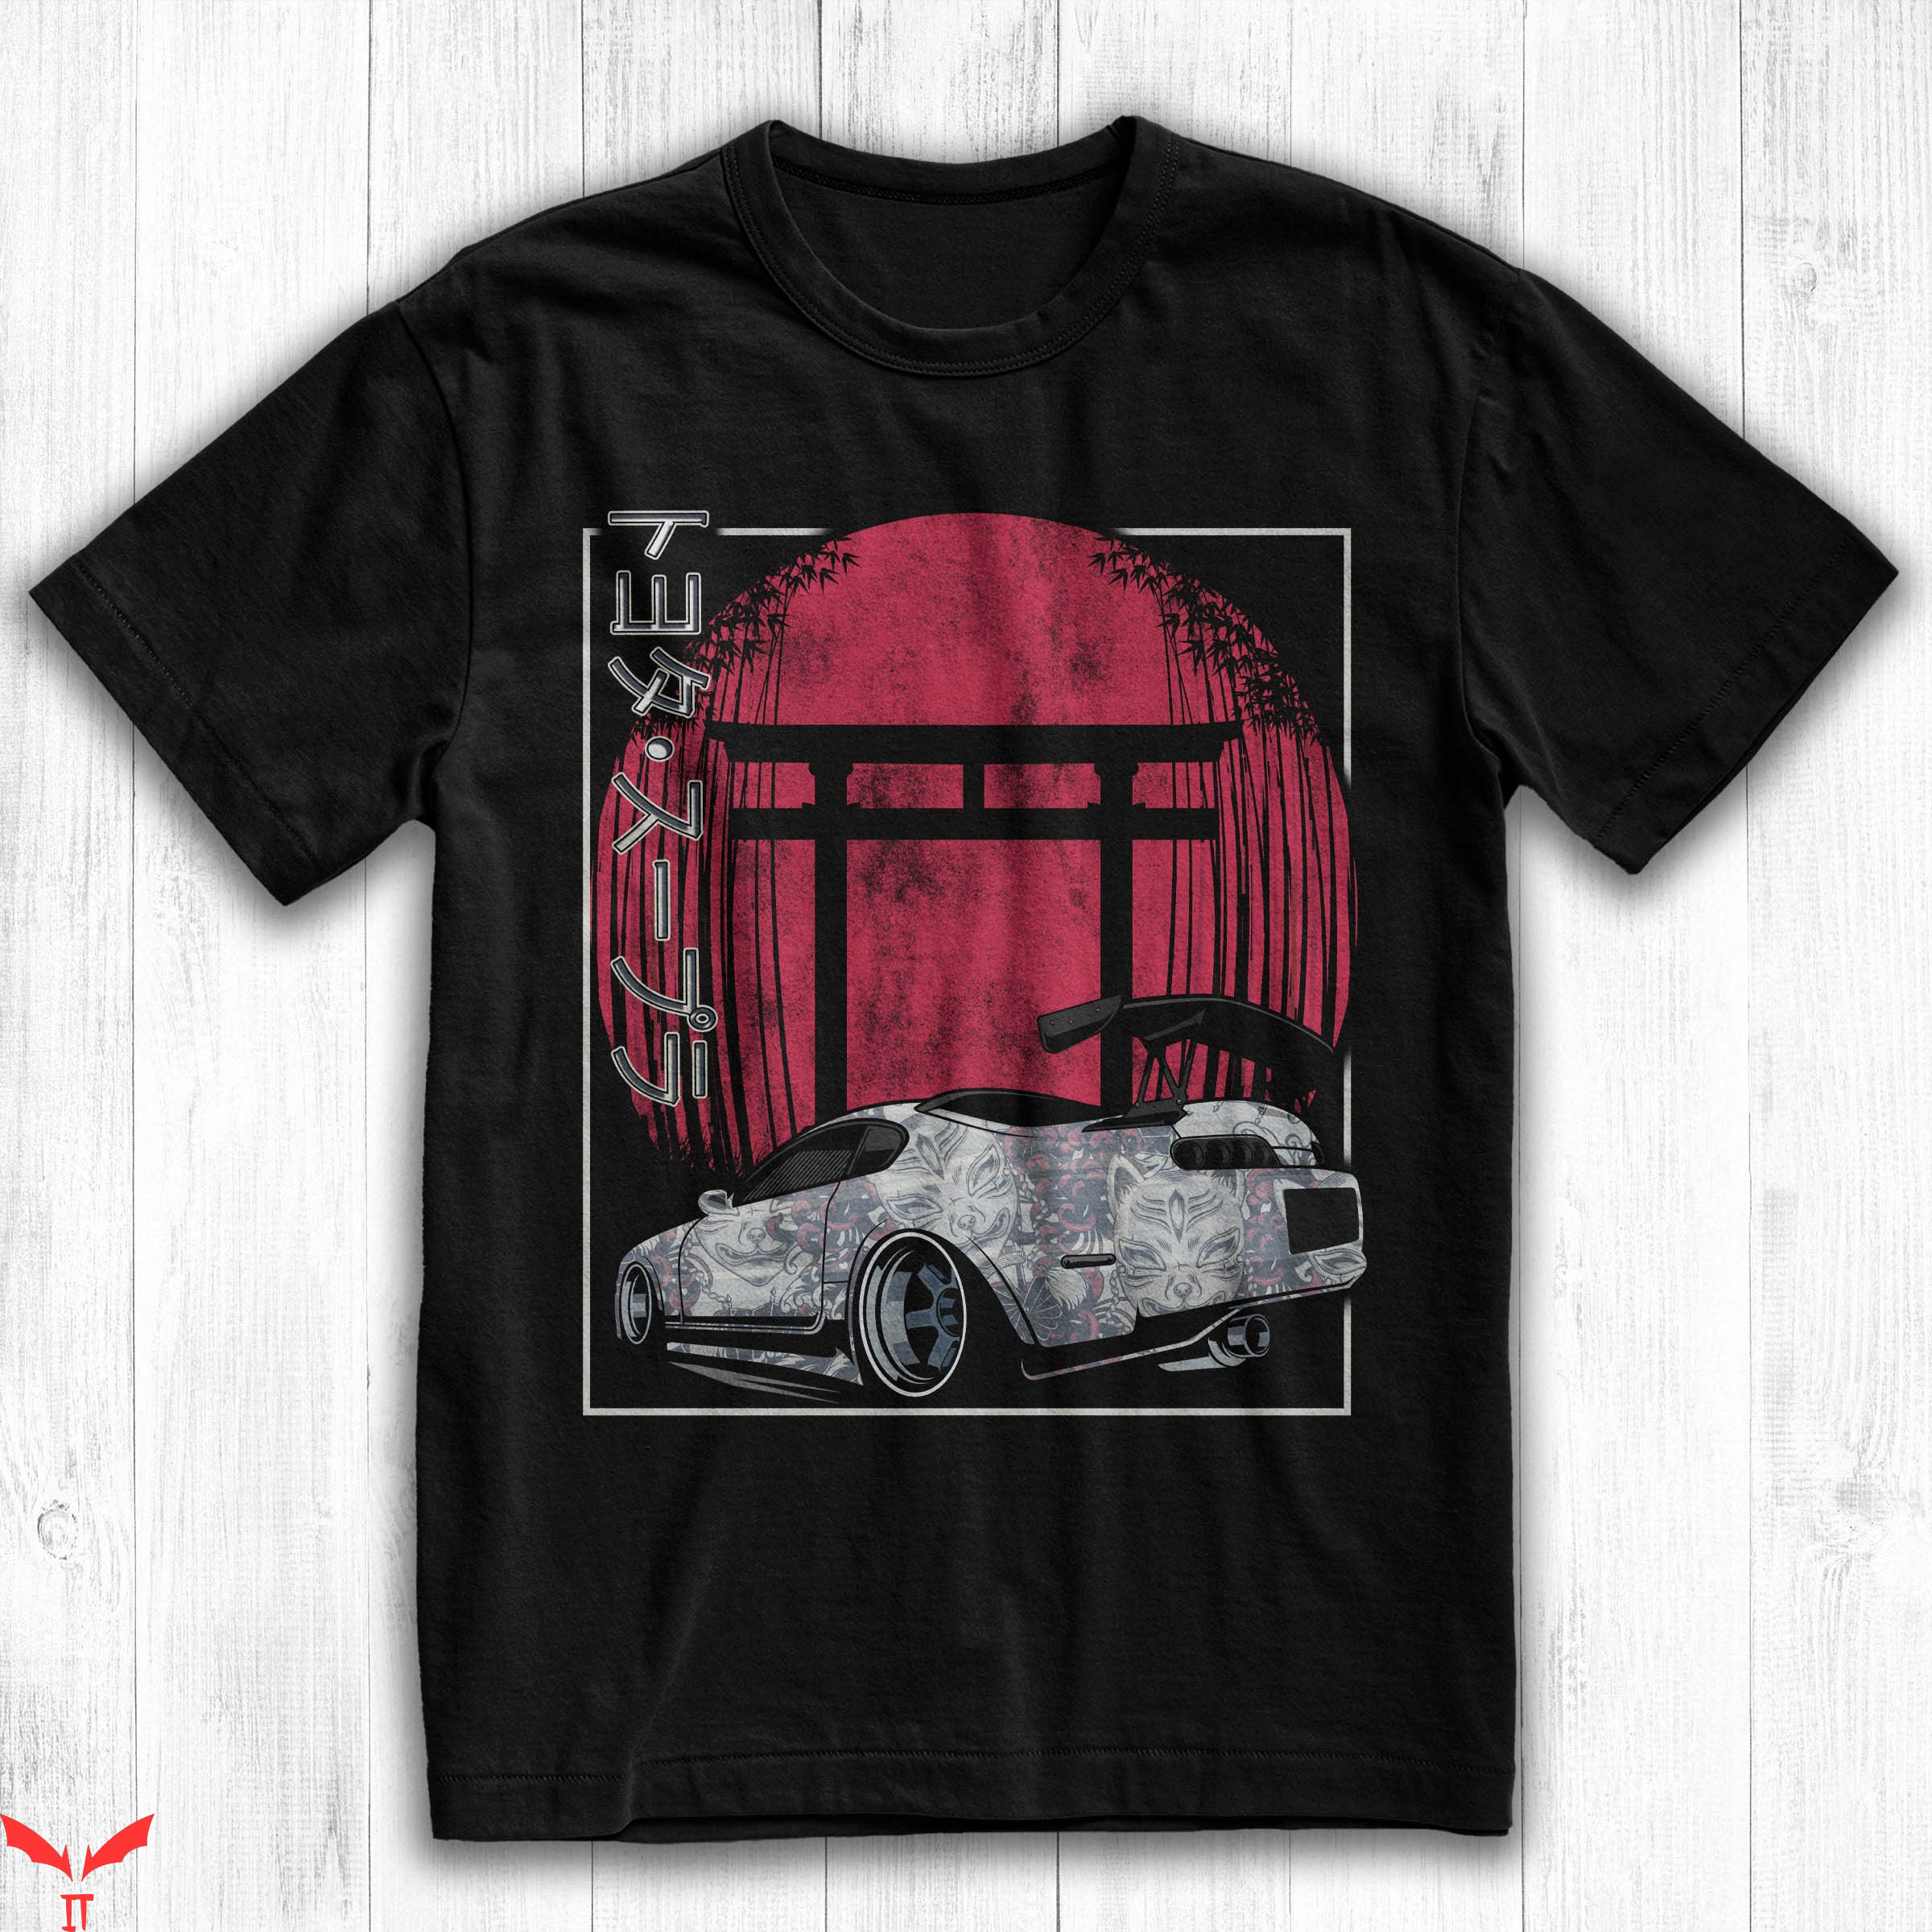 Japanese T-Shirt Japan Street Racing Tuner Tshirt